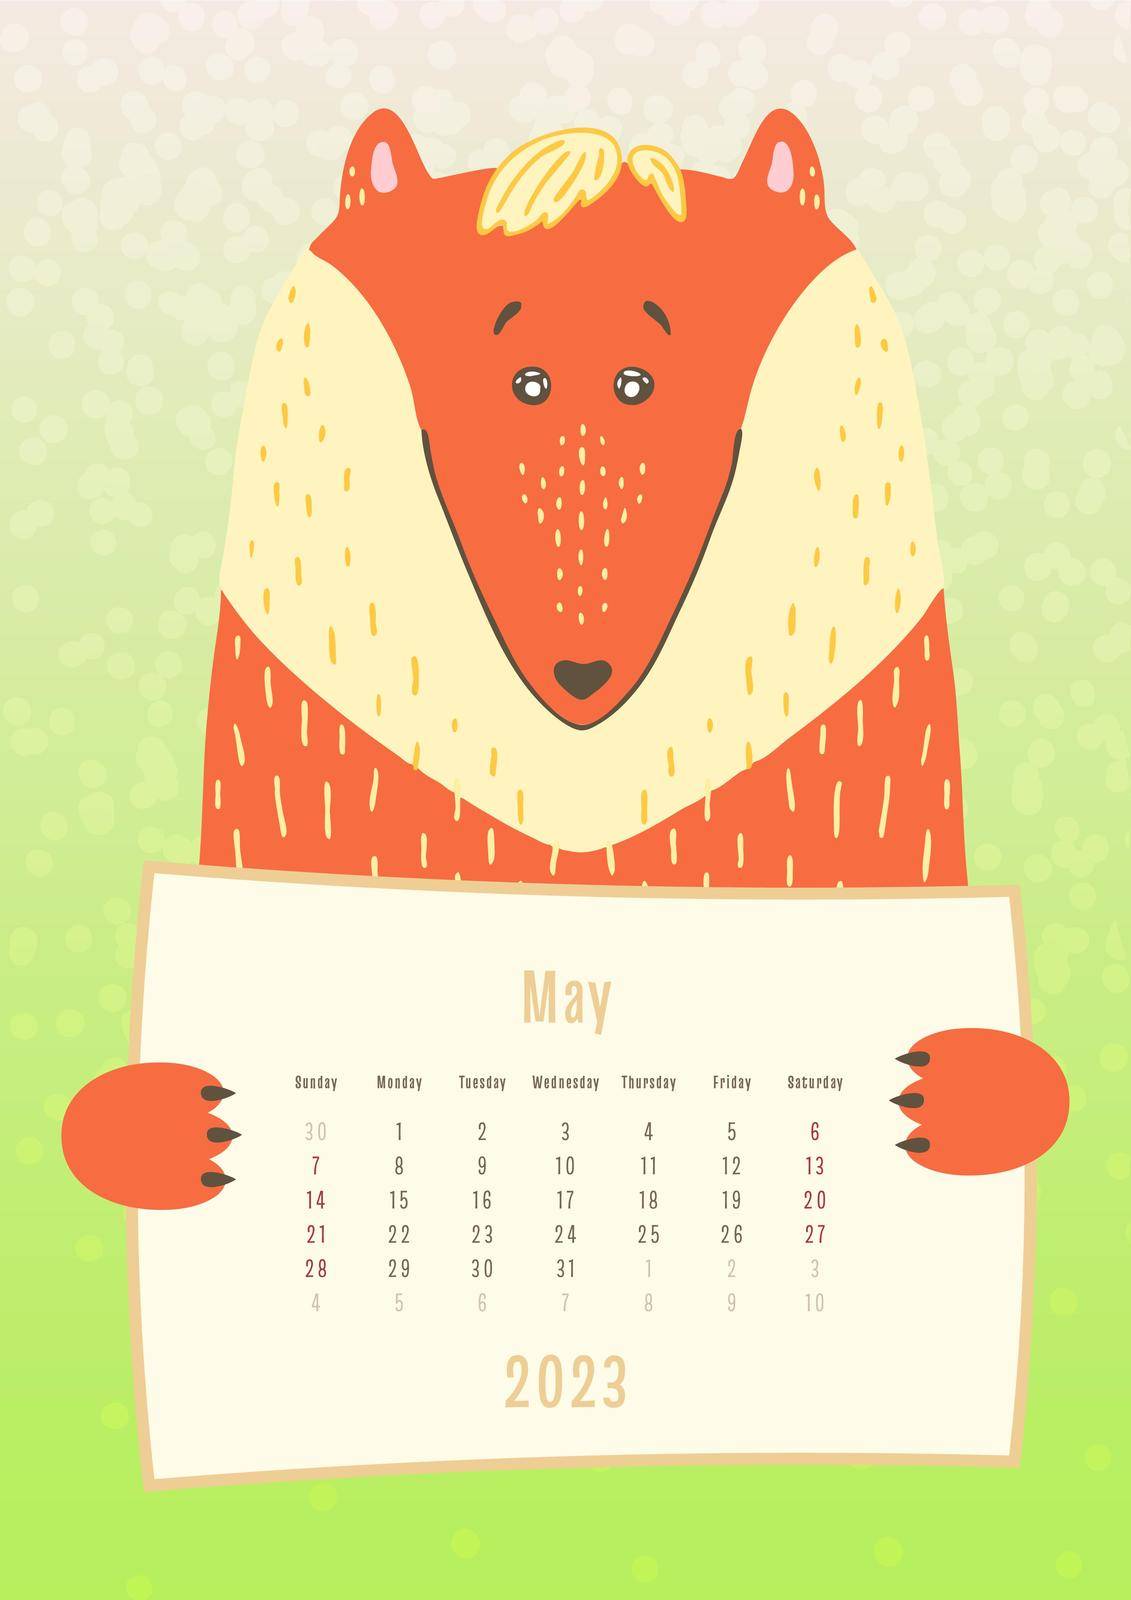 2023 may calendar, cute fox animal holding a monthly calendar sheet, hand drawn childish style.